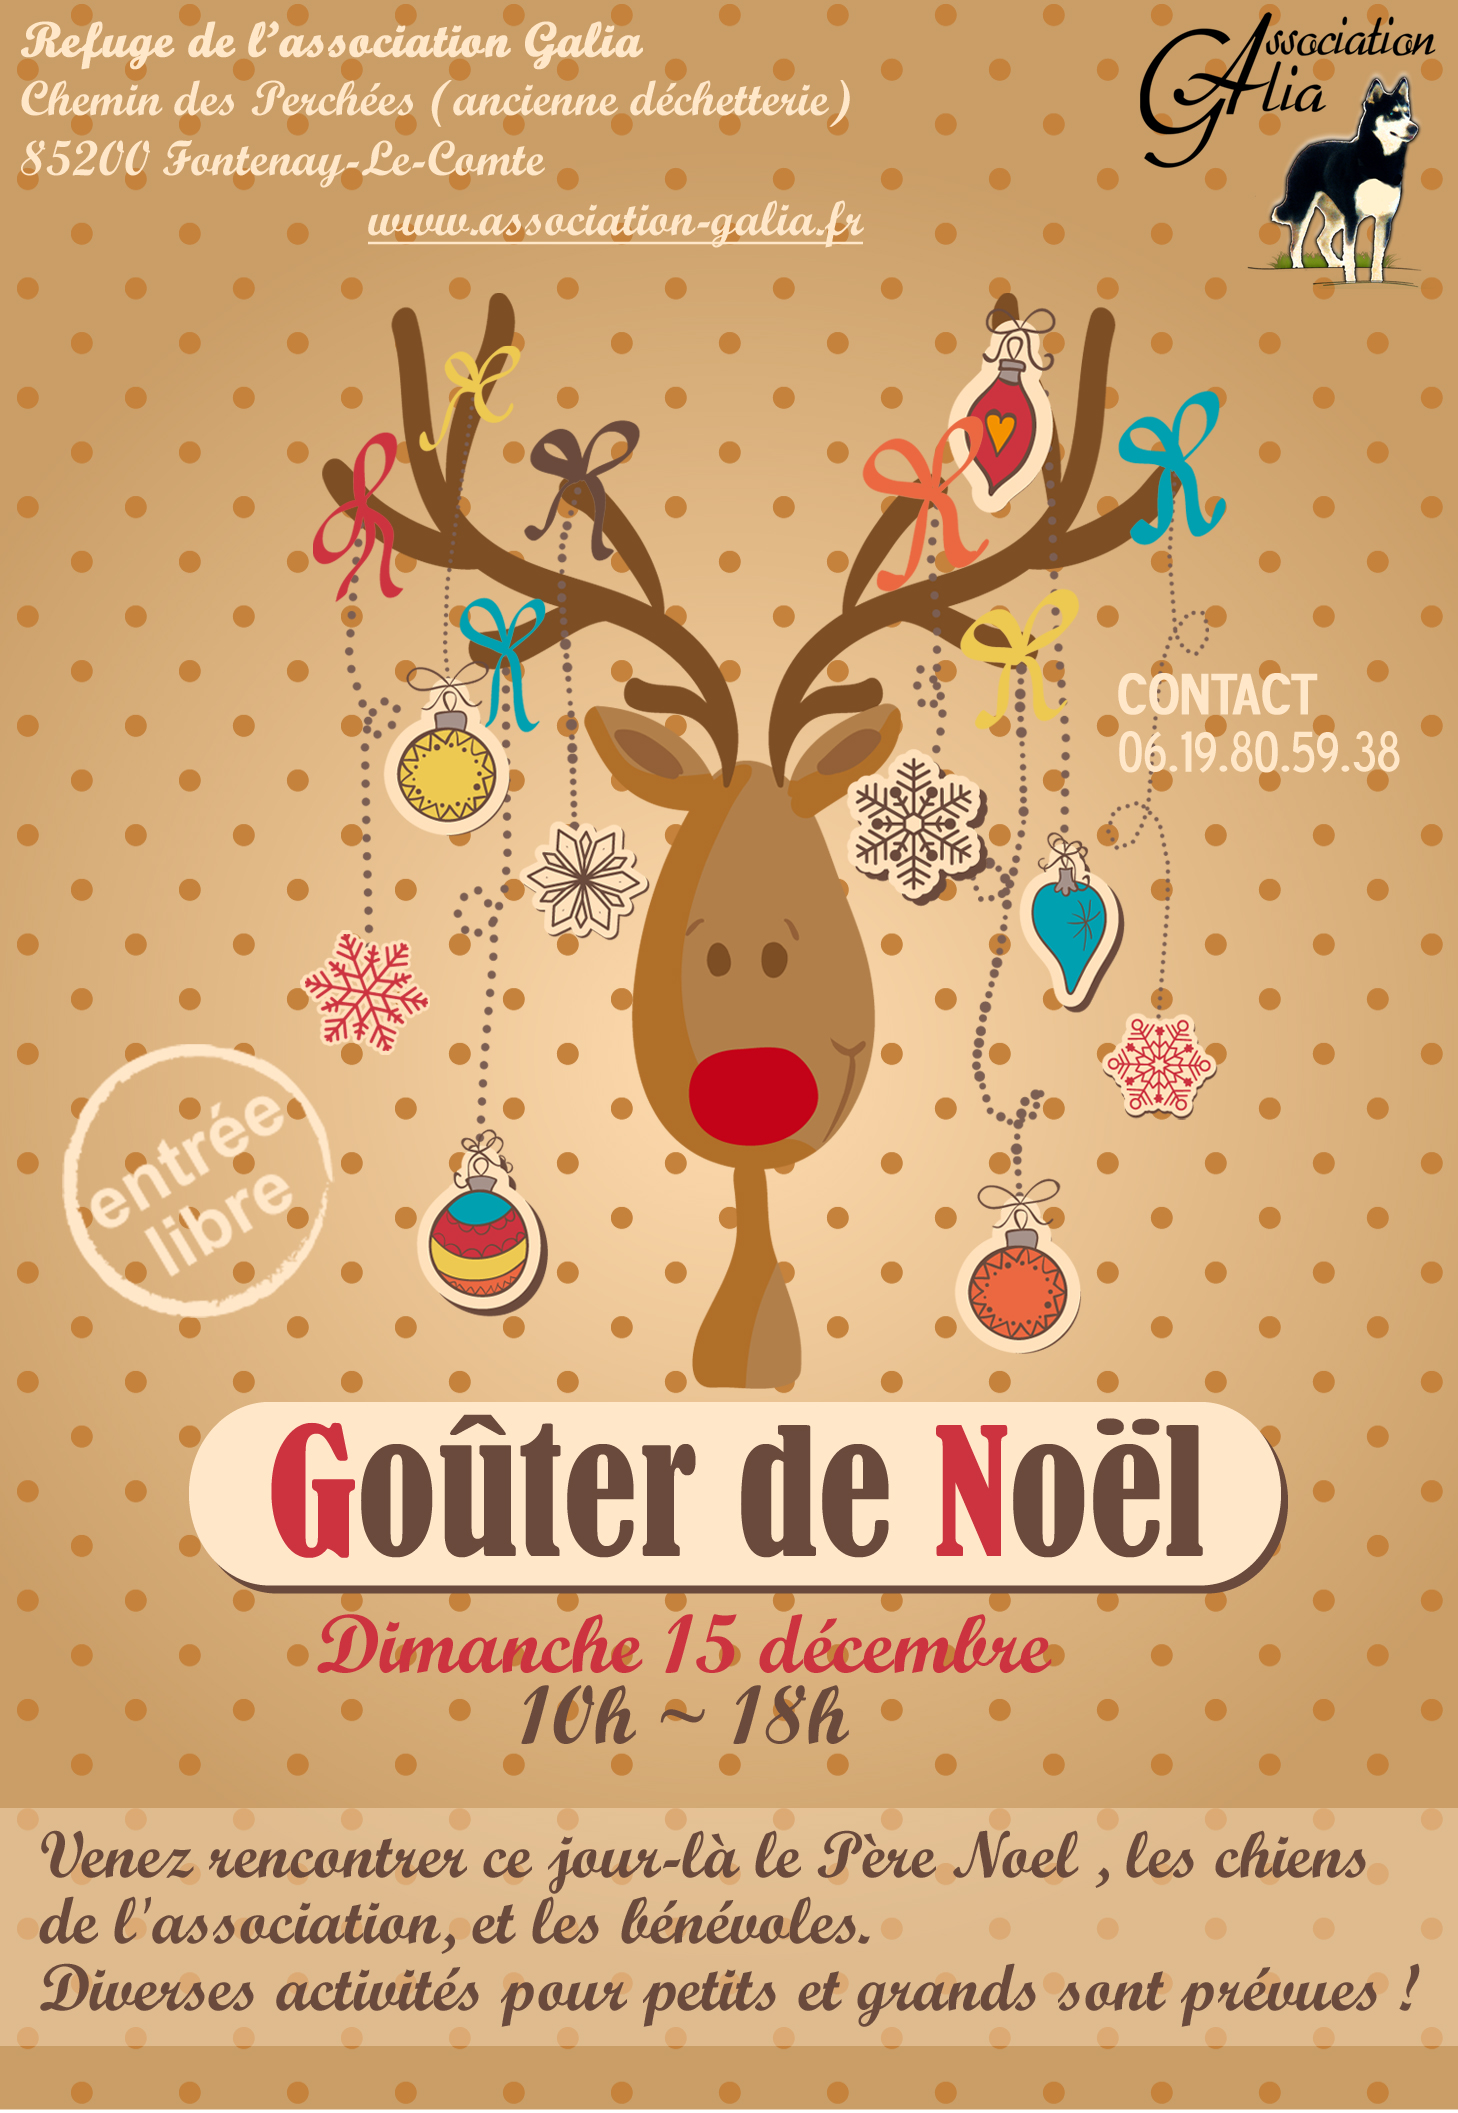 Affiche du goûter de Noël de l'association Galia